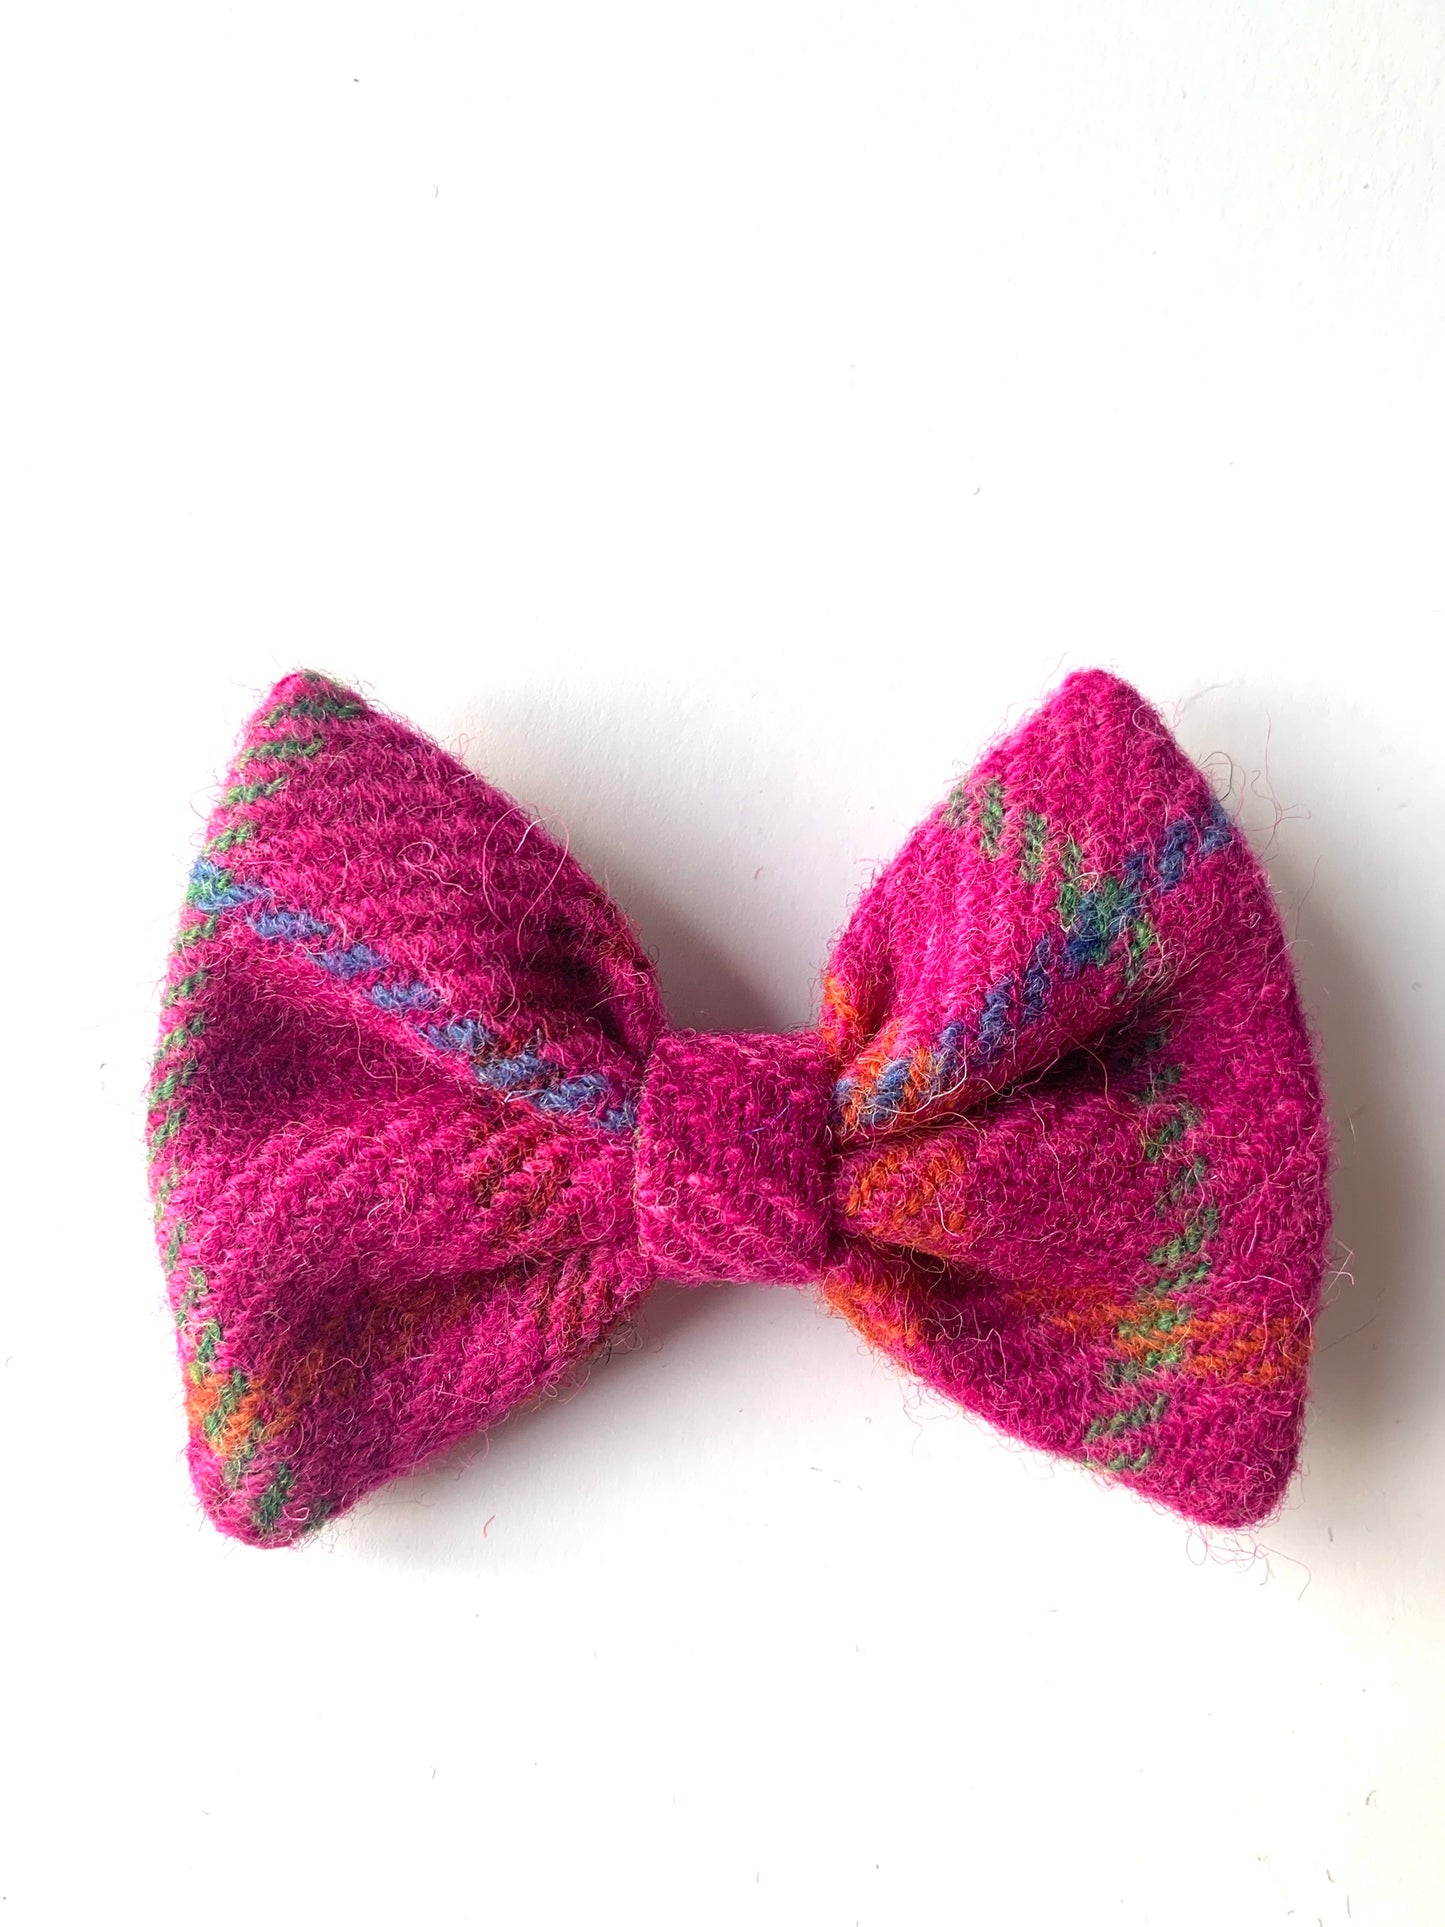 (Iona) Bowzos Bow - Harris Tweed® Cerise Pink Check